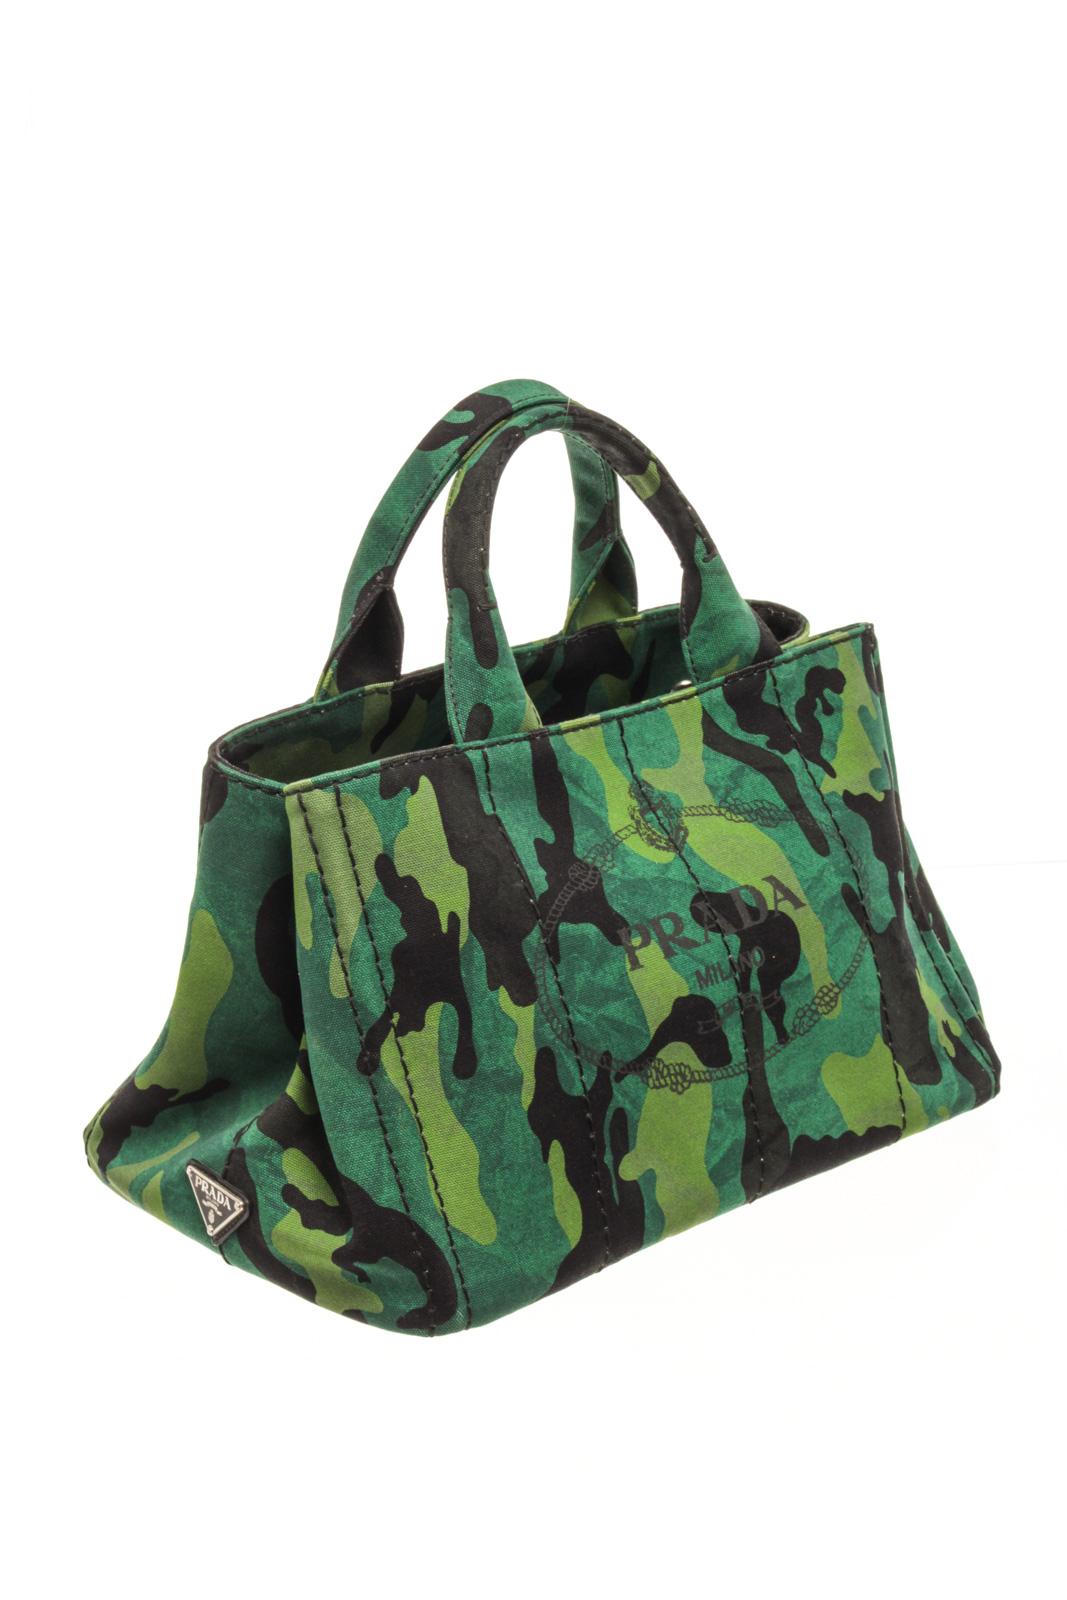 Prada Green Camo Canvas Canapa Tote Bag with top handle, canvas lining, interior zipper pocket, silver tone hardware. 

83220MSC